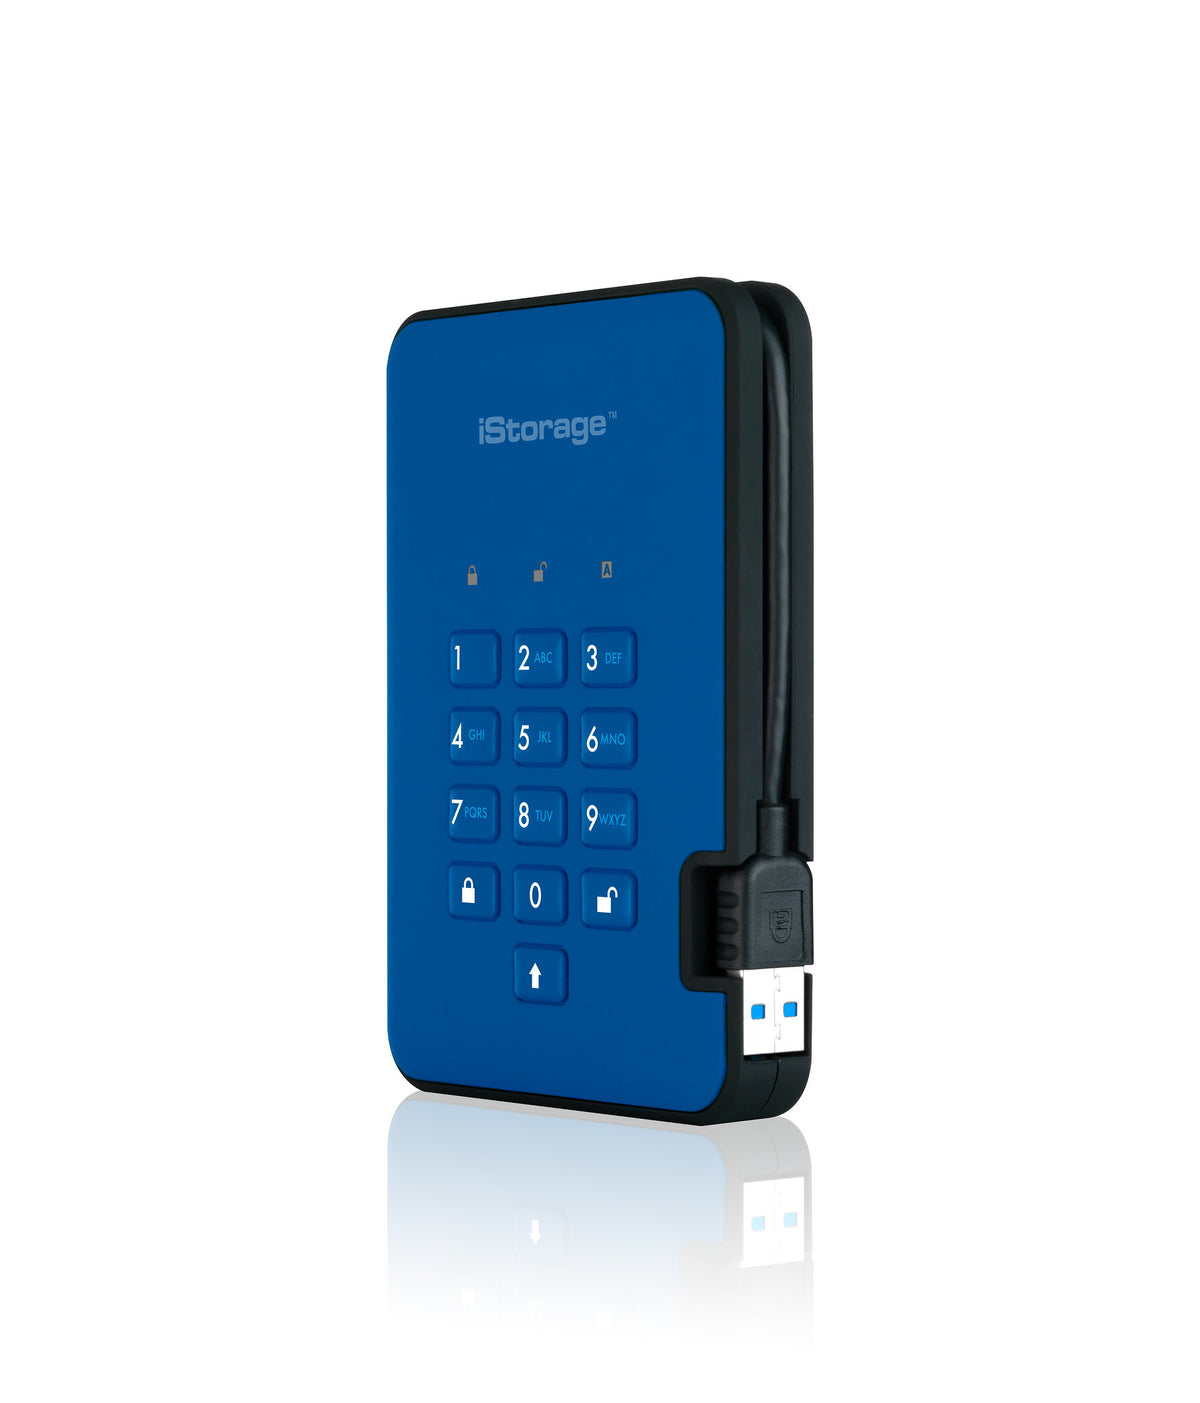 iStorage diskAshur2 - Secure Encrypted External hard drive in Blue - 2 TB